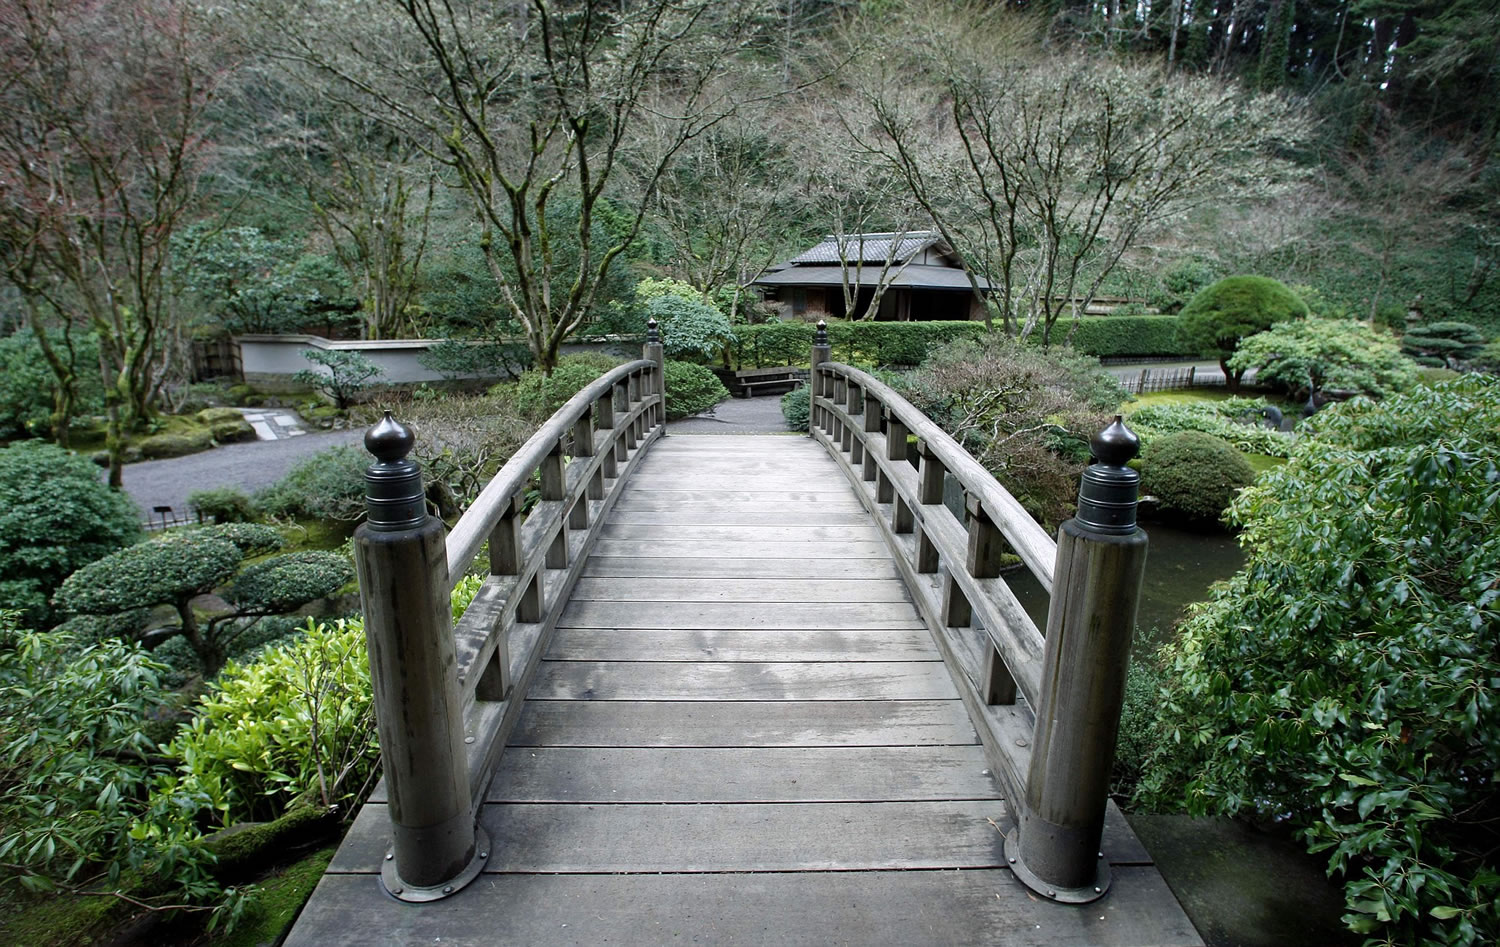 Enjoy free admission to the Portland Japanese Garden on Feb. 16.